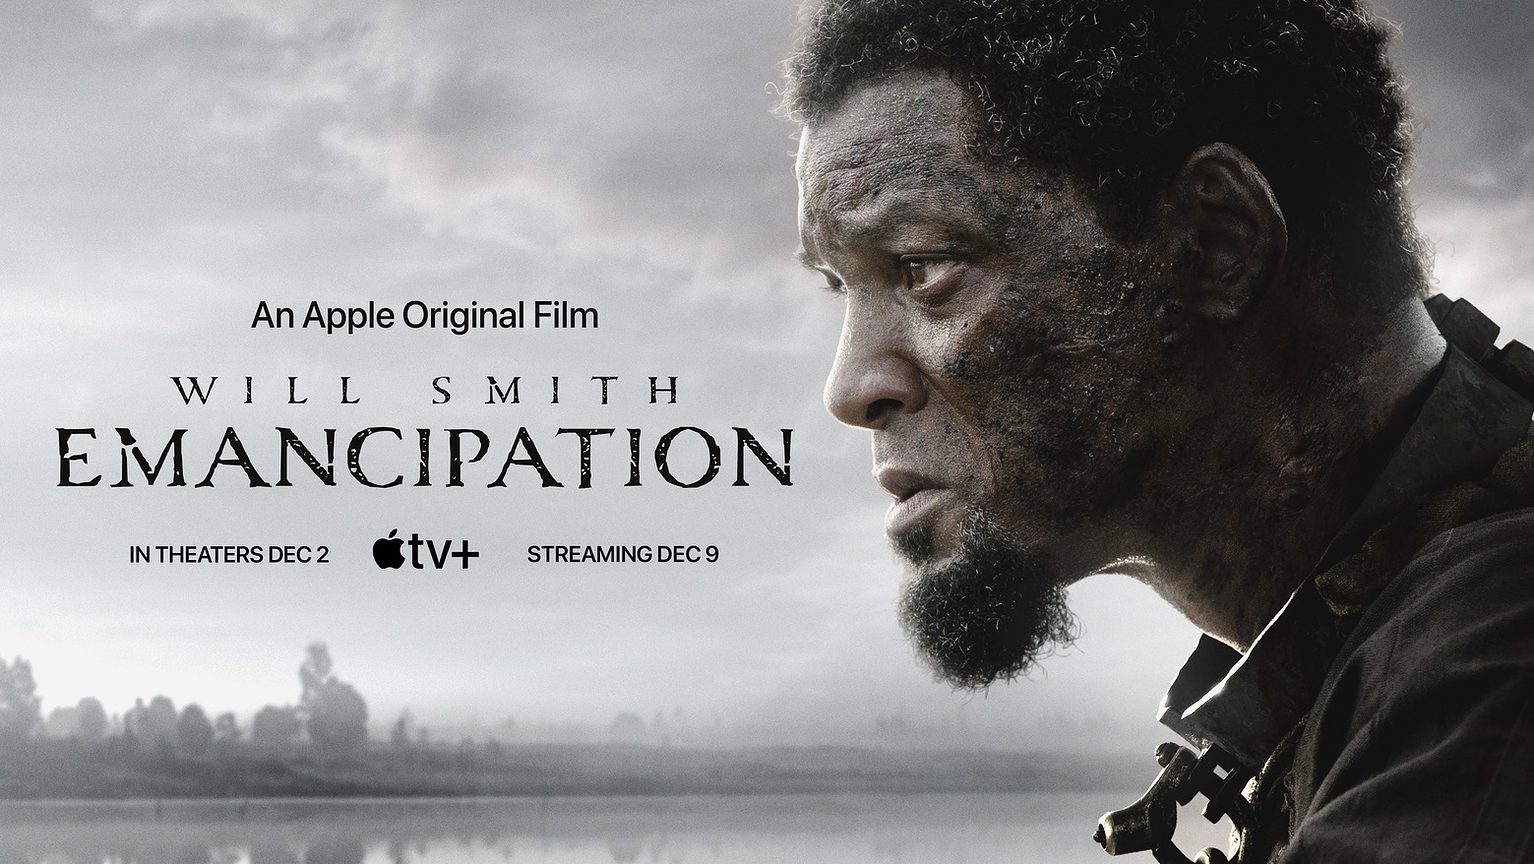 'Emancipation' on Apple TV+ stars will Smith